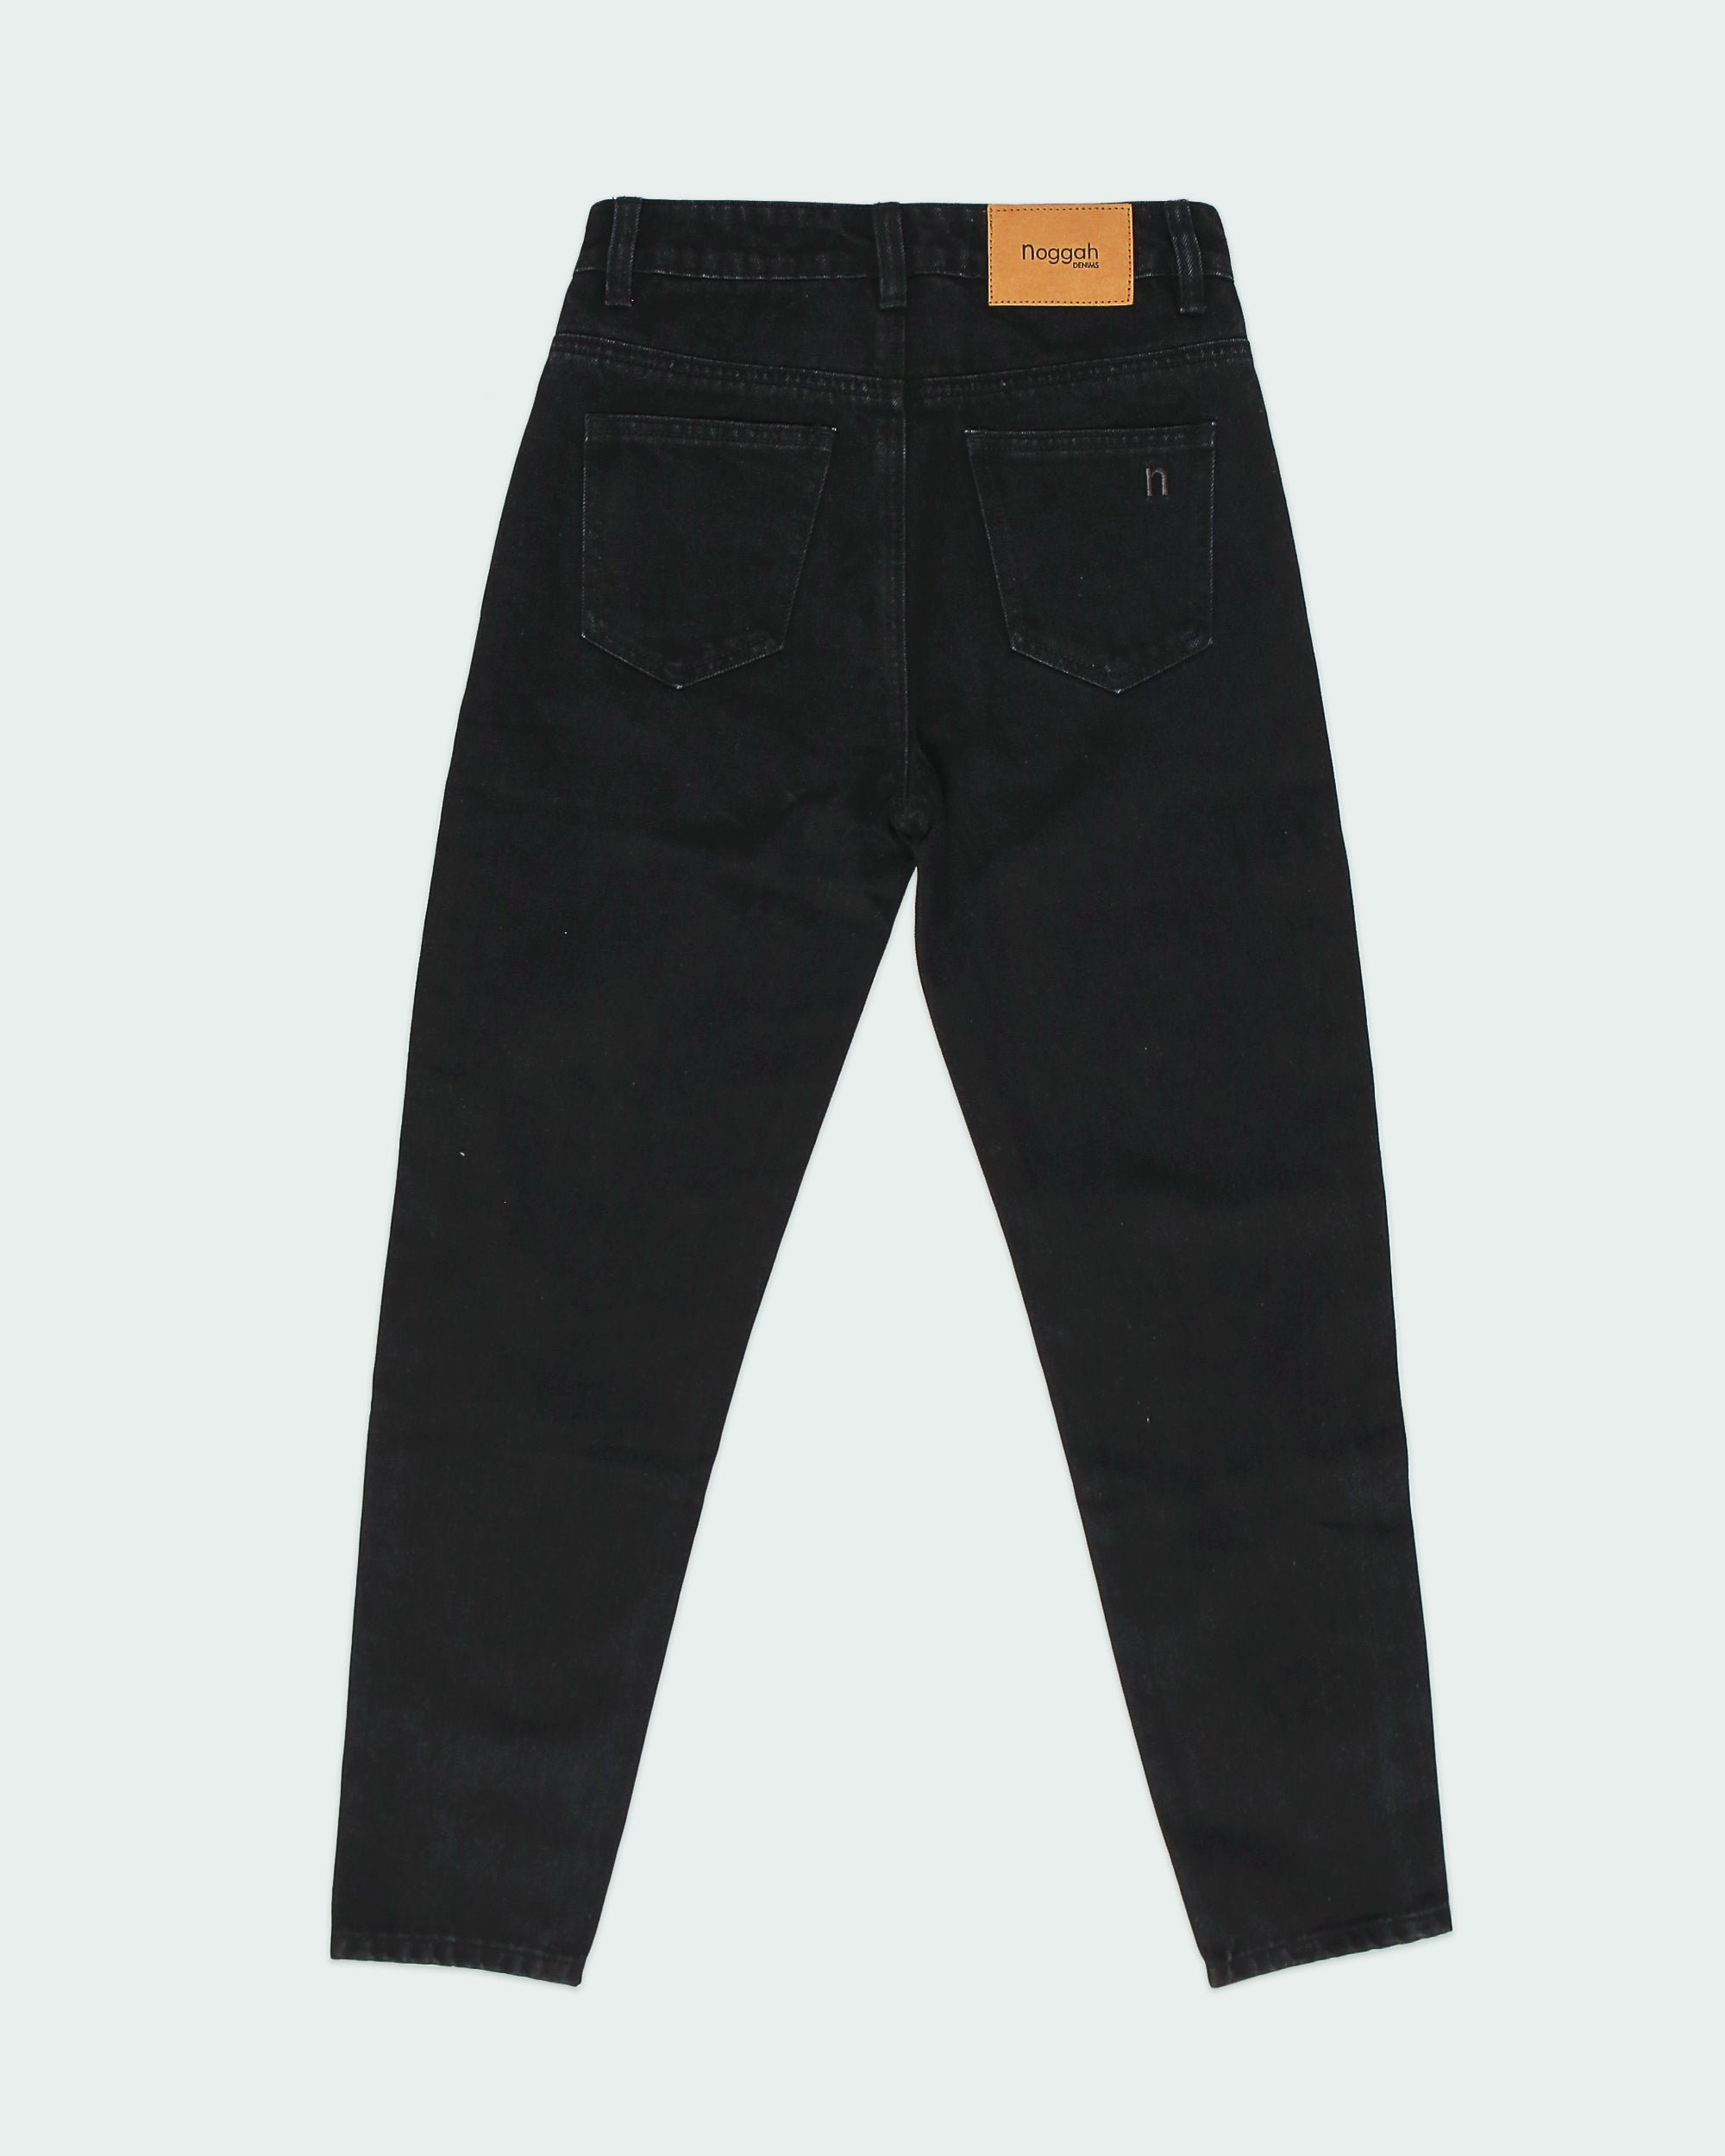 Buy Jack & Jones Dark Blue Denim Bootcut Jeans for Mens Online @ Tata CLiQ